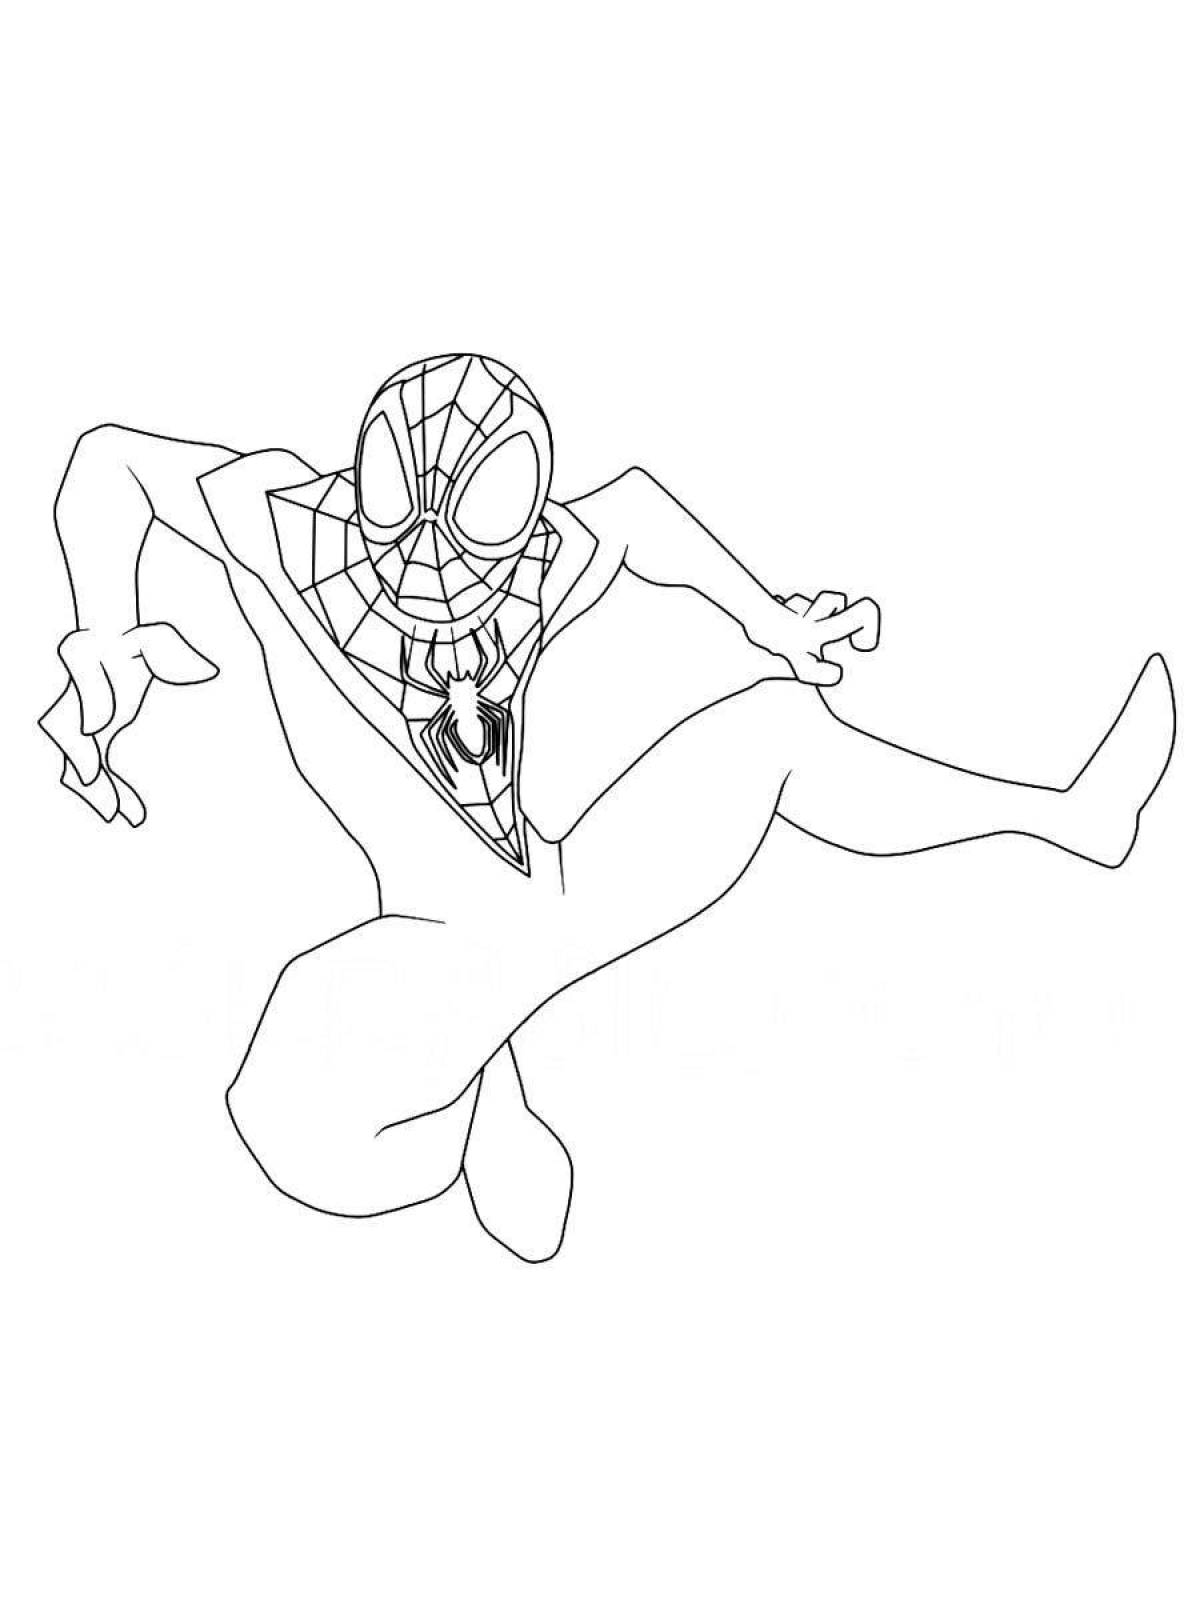 Spider-man fun coloring misles morales